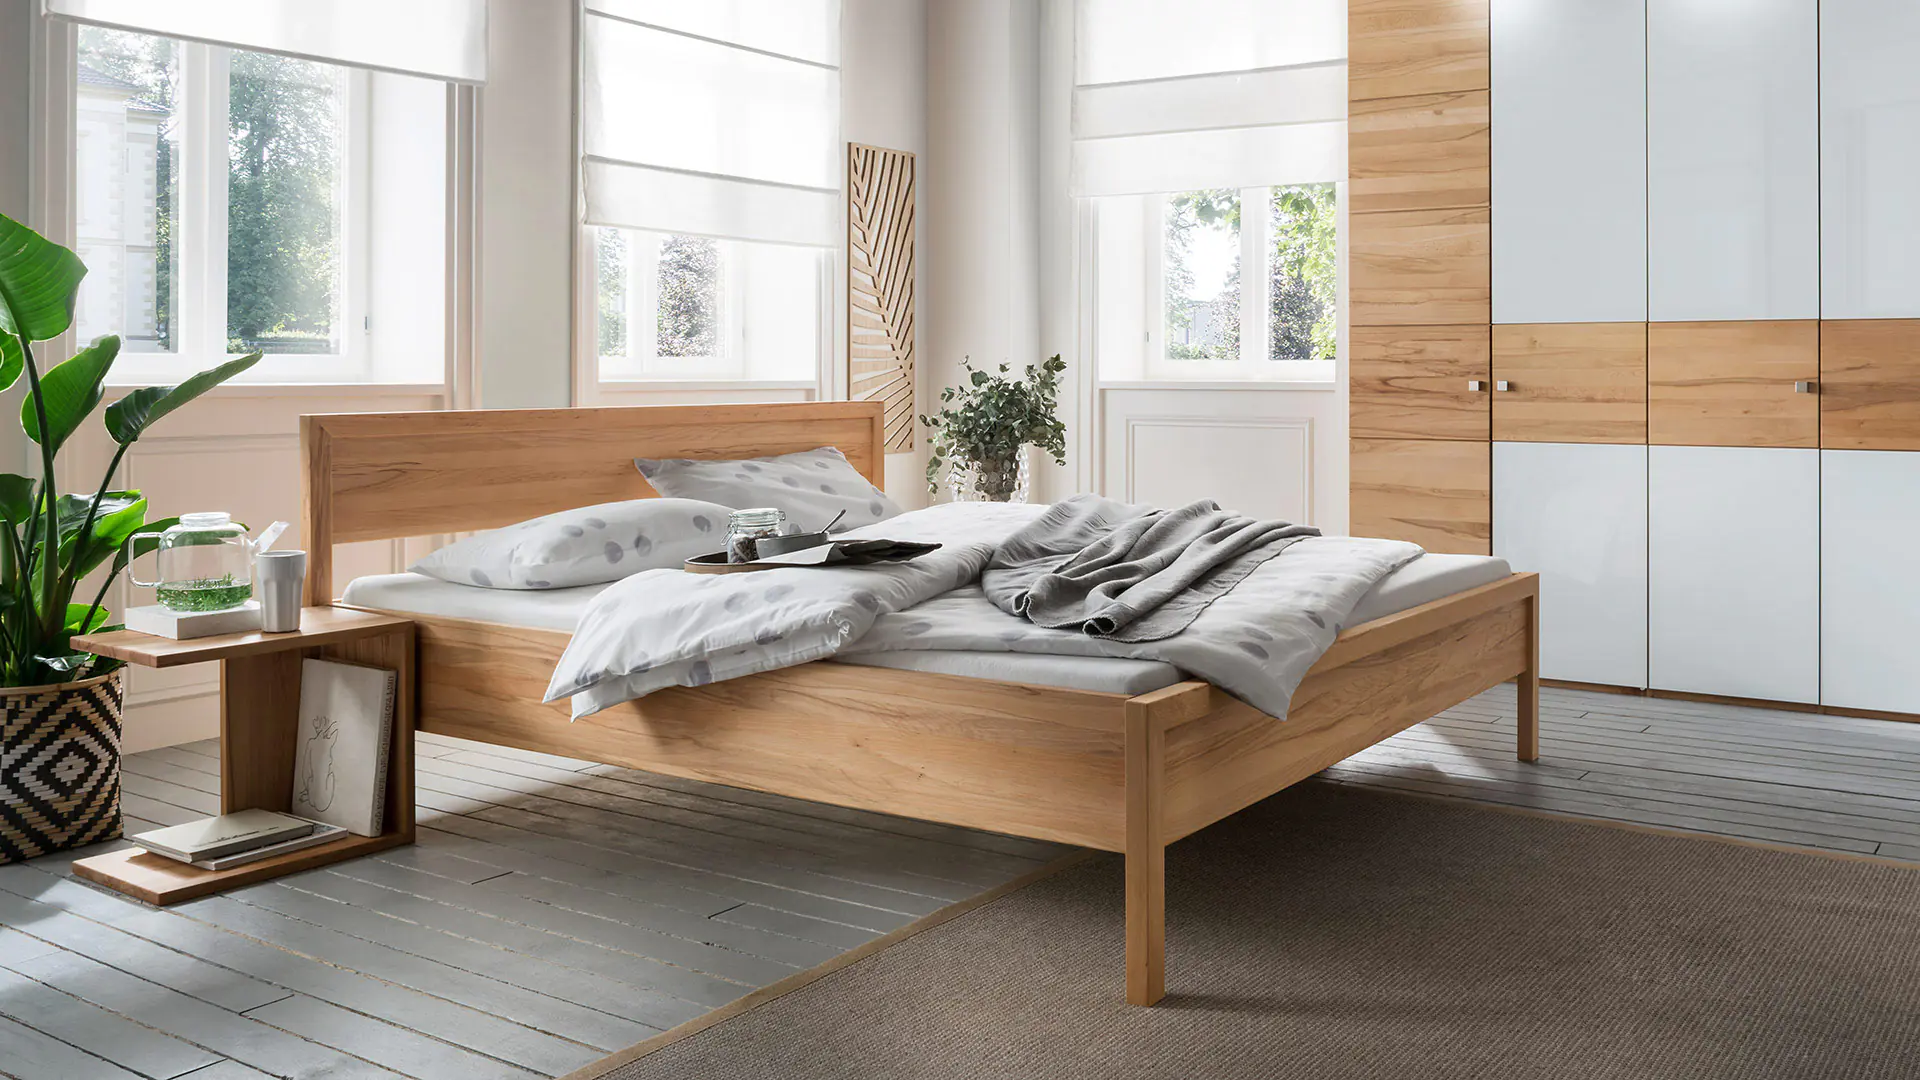 Silia massief houten bed straalt elegante charme uit